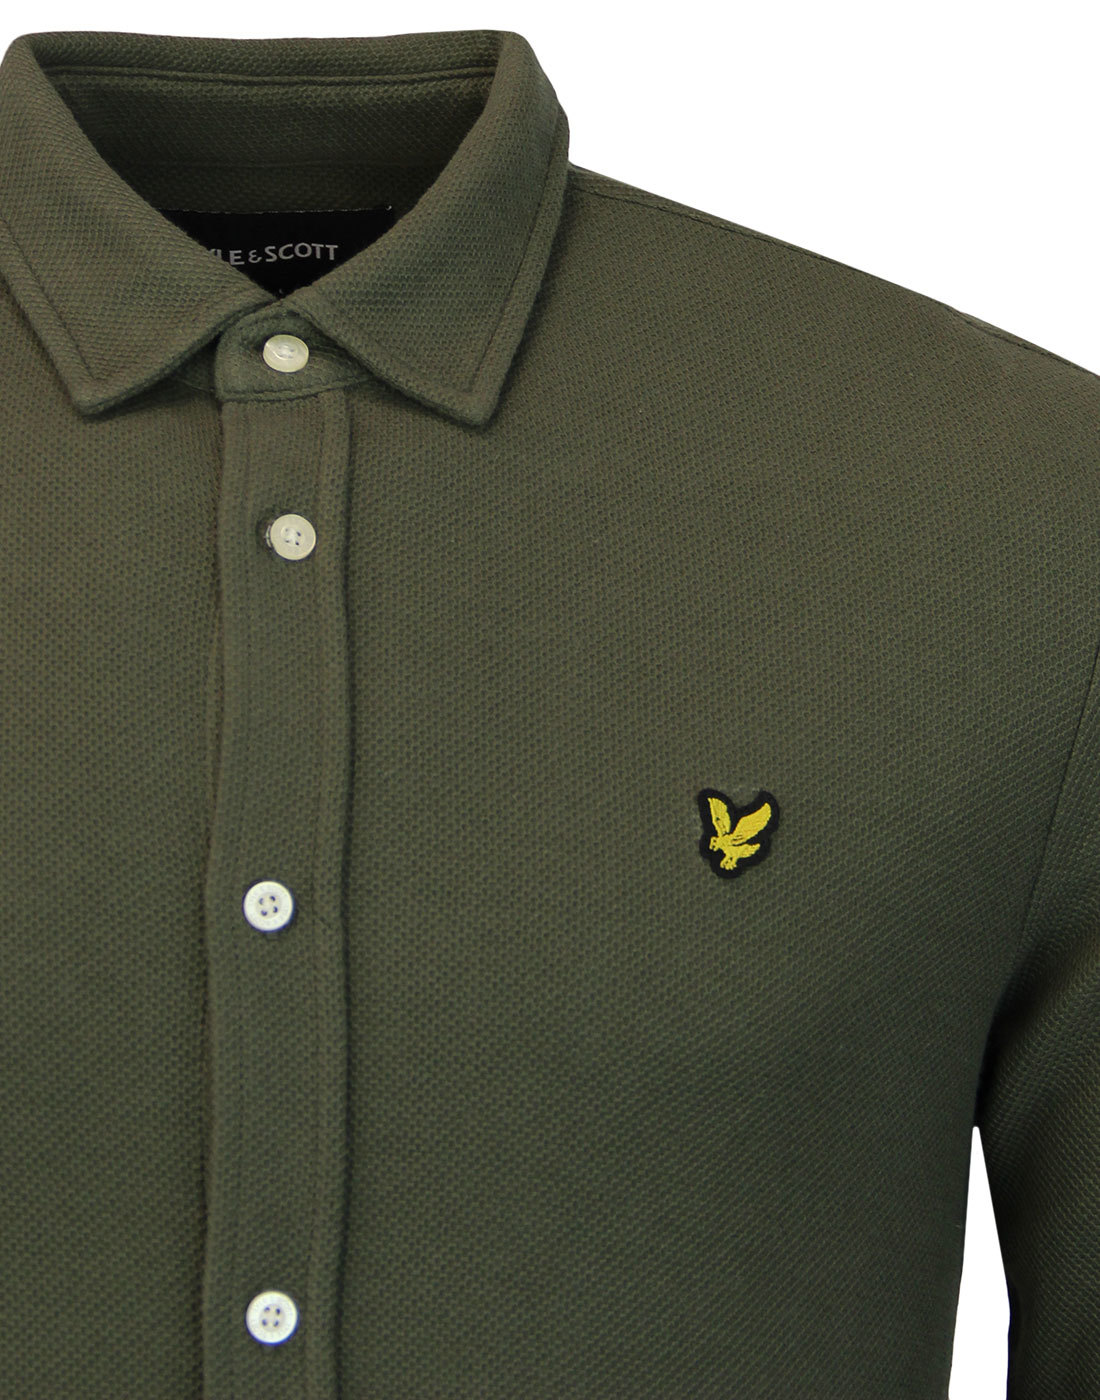 LYLE & SCOTT Men's Retro 60s Mod Honeycomb Jersey Shirt in Olive